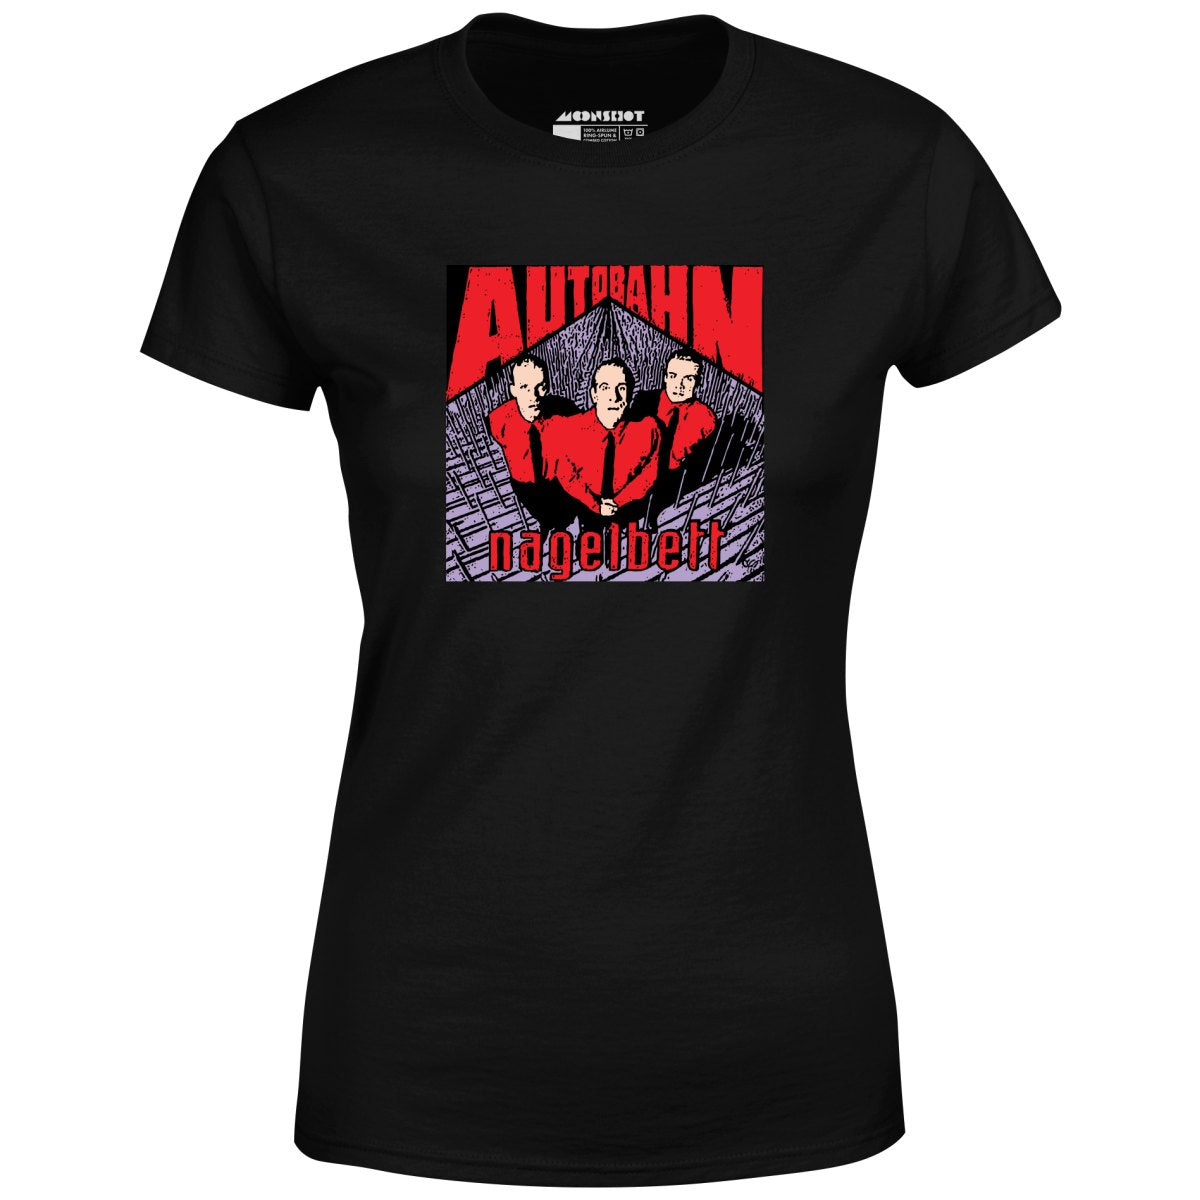 Autobahn - Big Lebowski - Women's T-Shirt